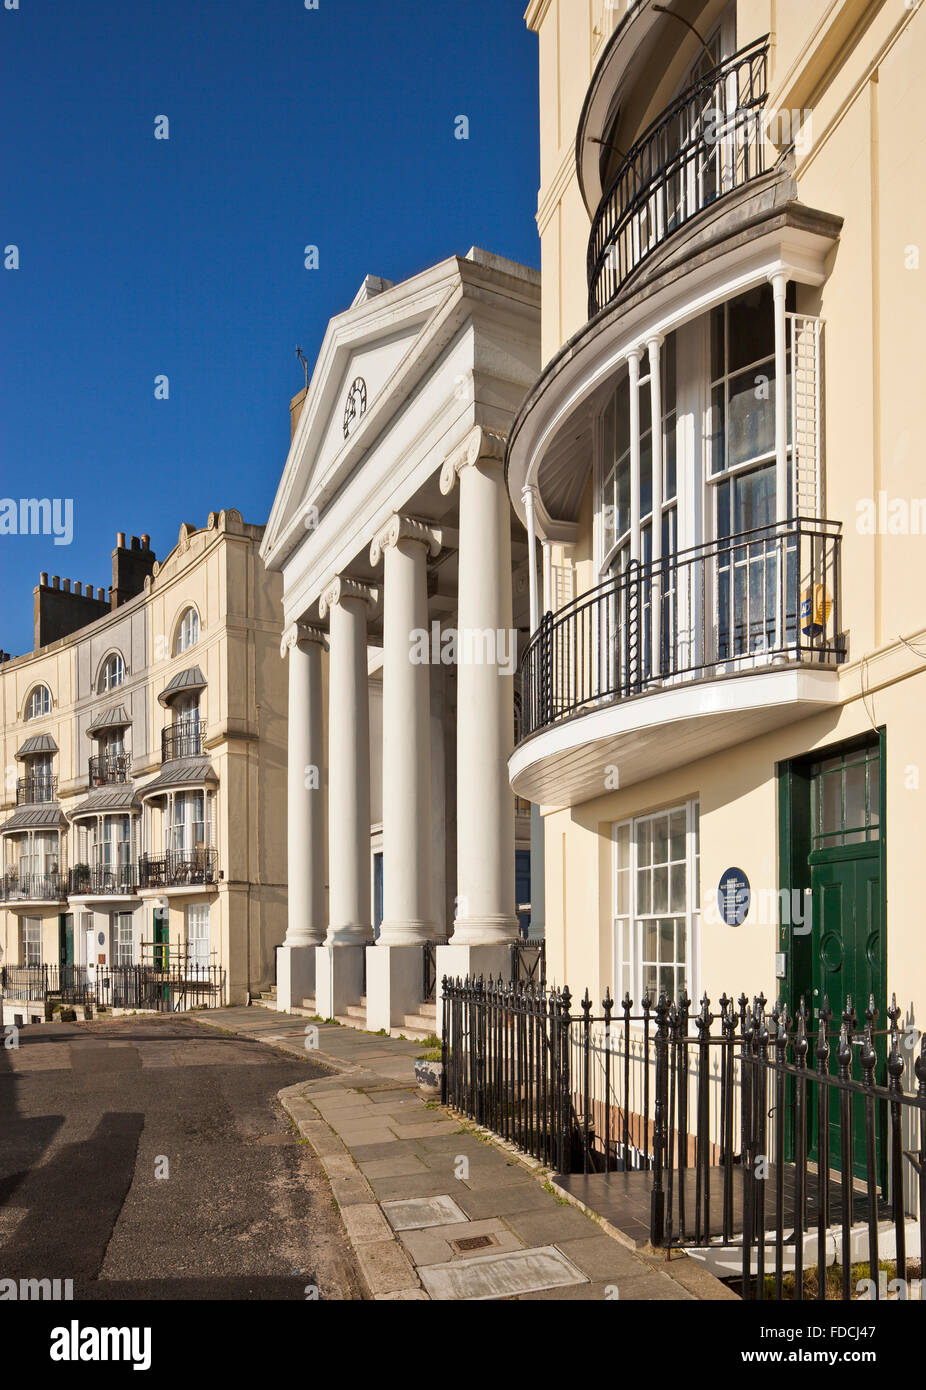 The Regency architecture of Pelham Crescent, Hastings. Stock Photo